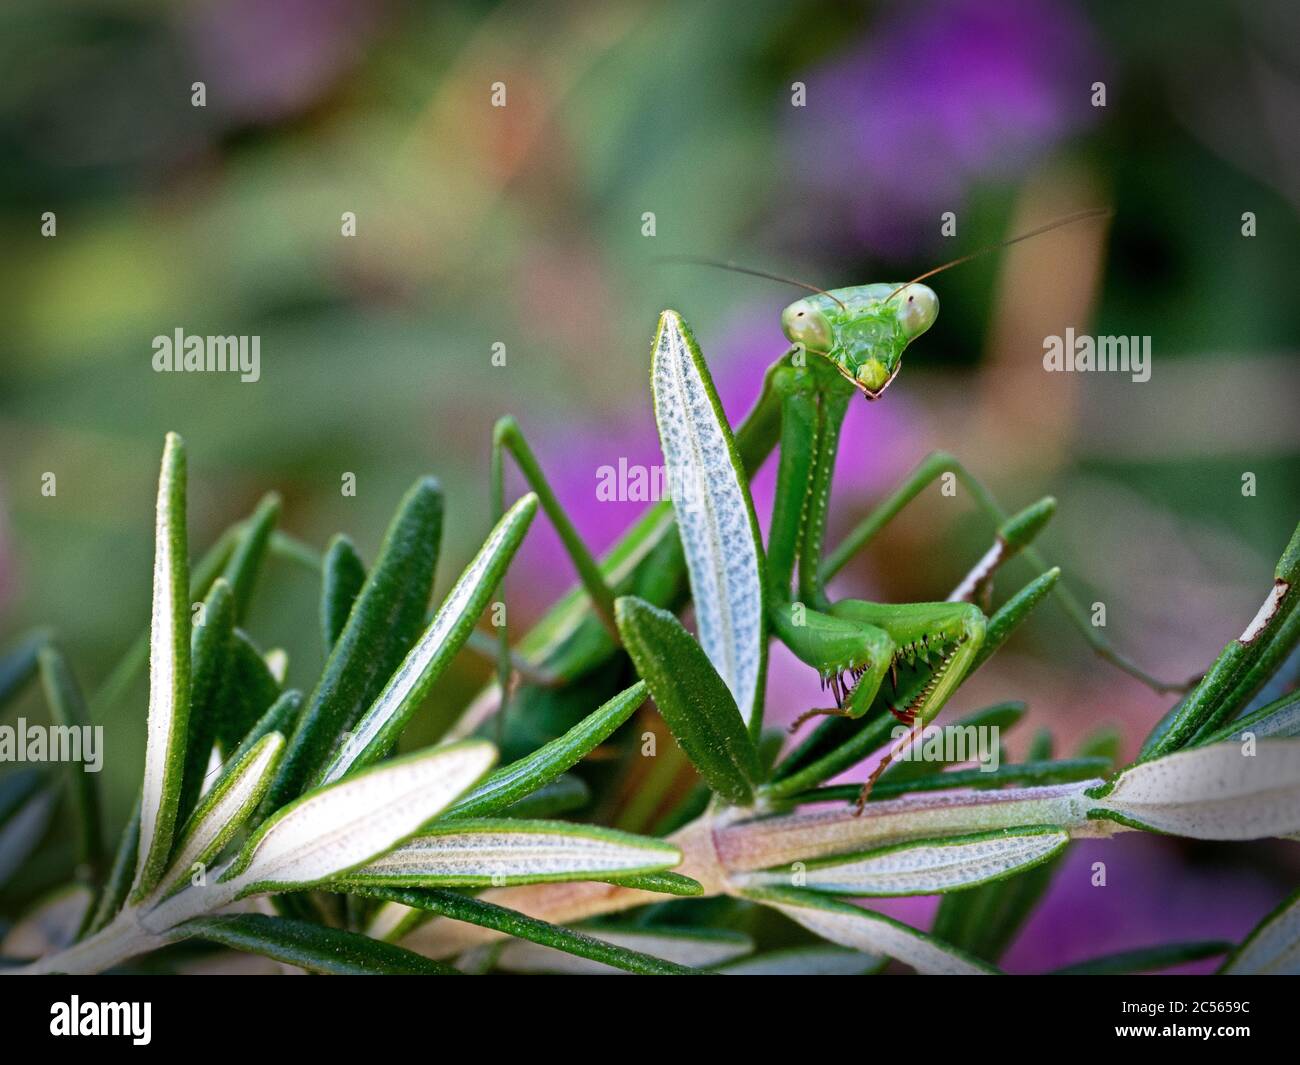 Preying Mantis on a garden Rosemary bush. Victoria, Australia. Stock Photo